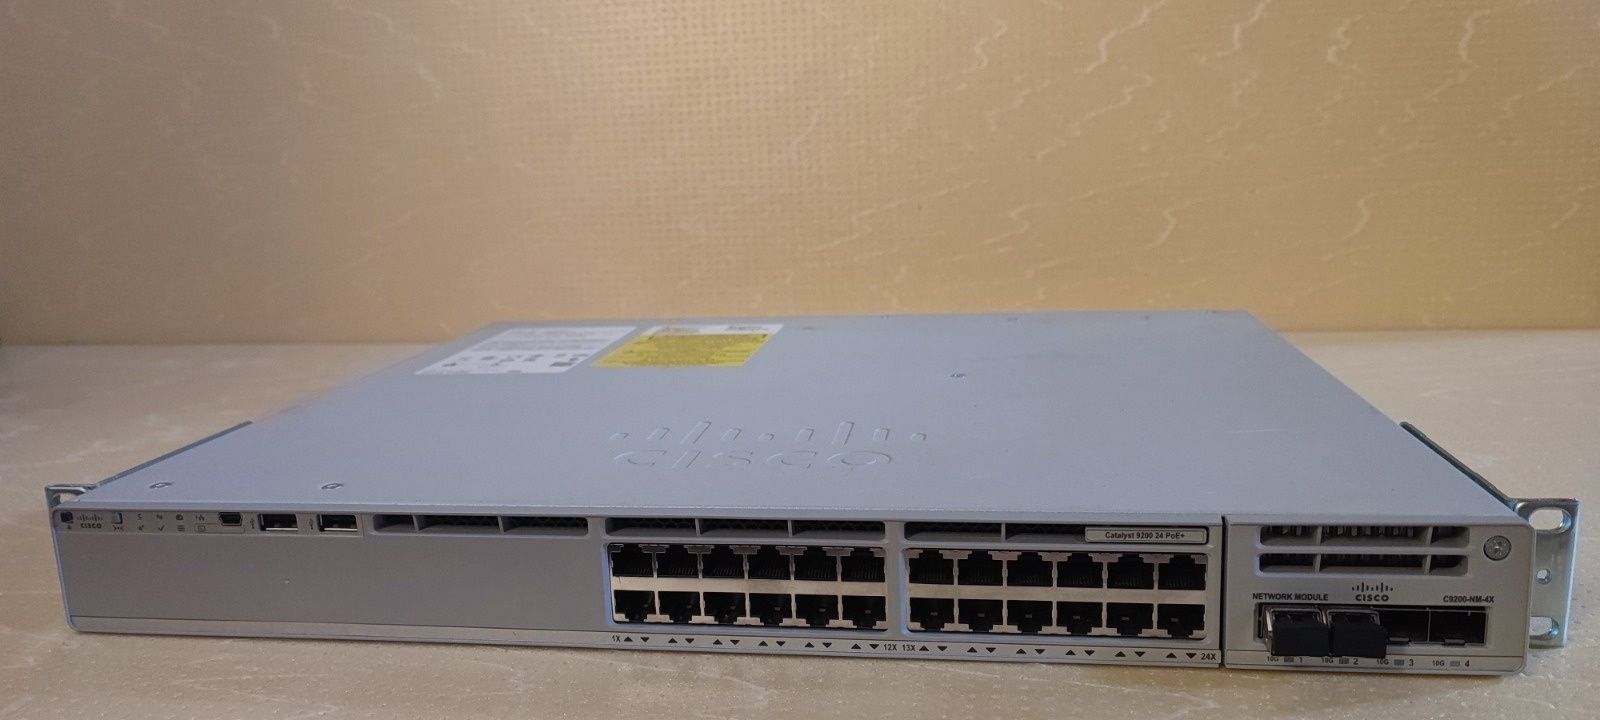 Cisco catalyst C9200-24PB-A, PoE+, Network Advantage, 4x10G port